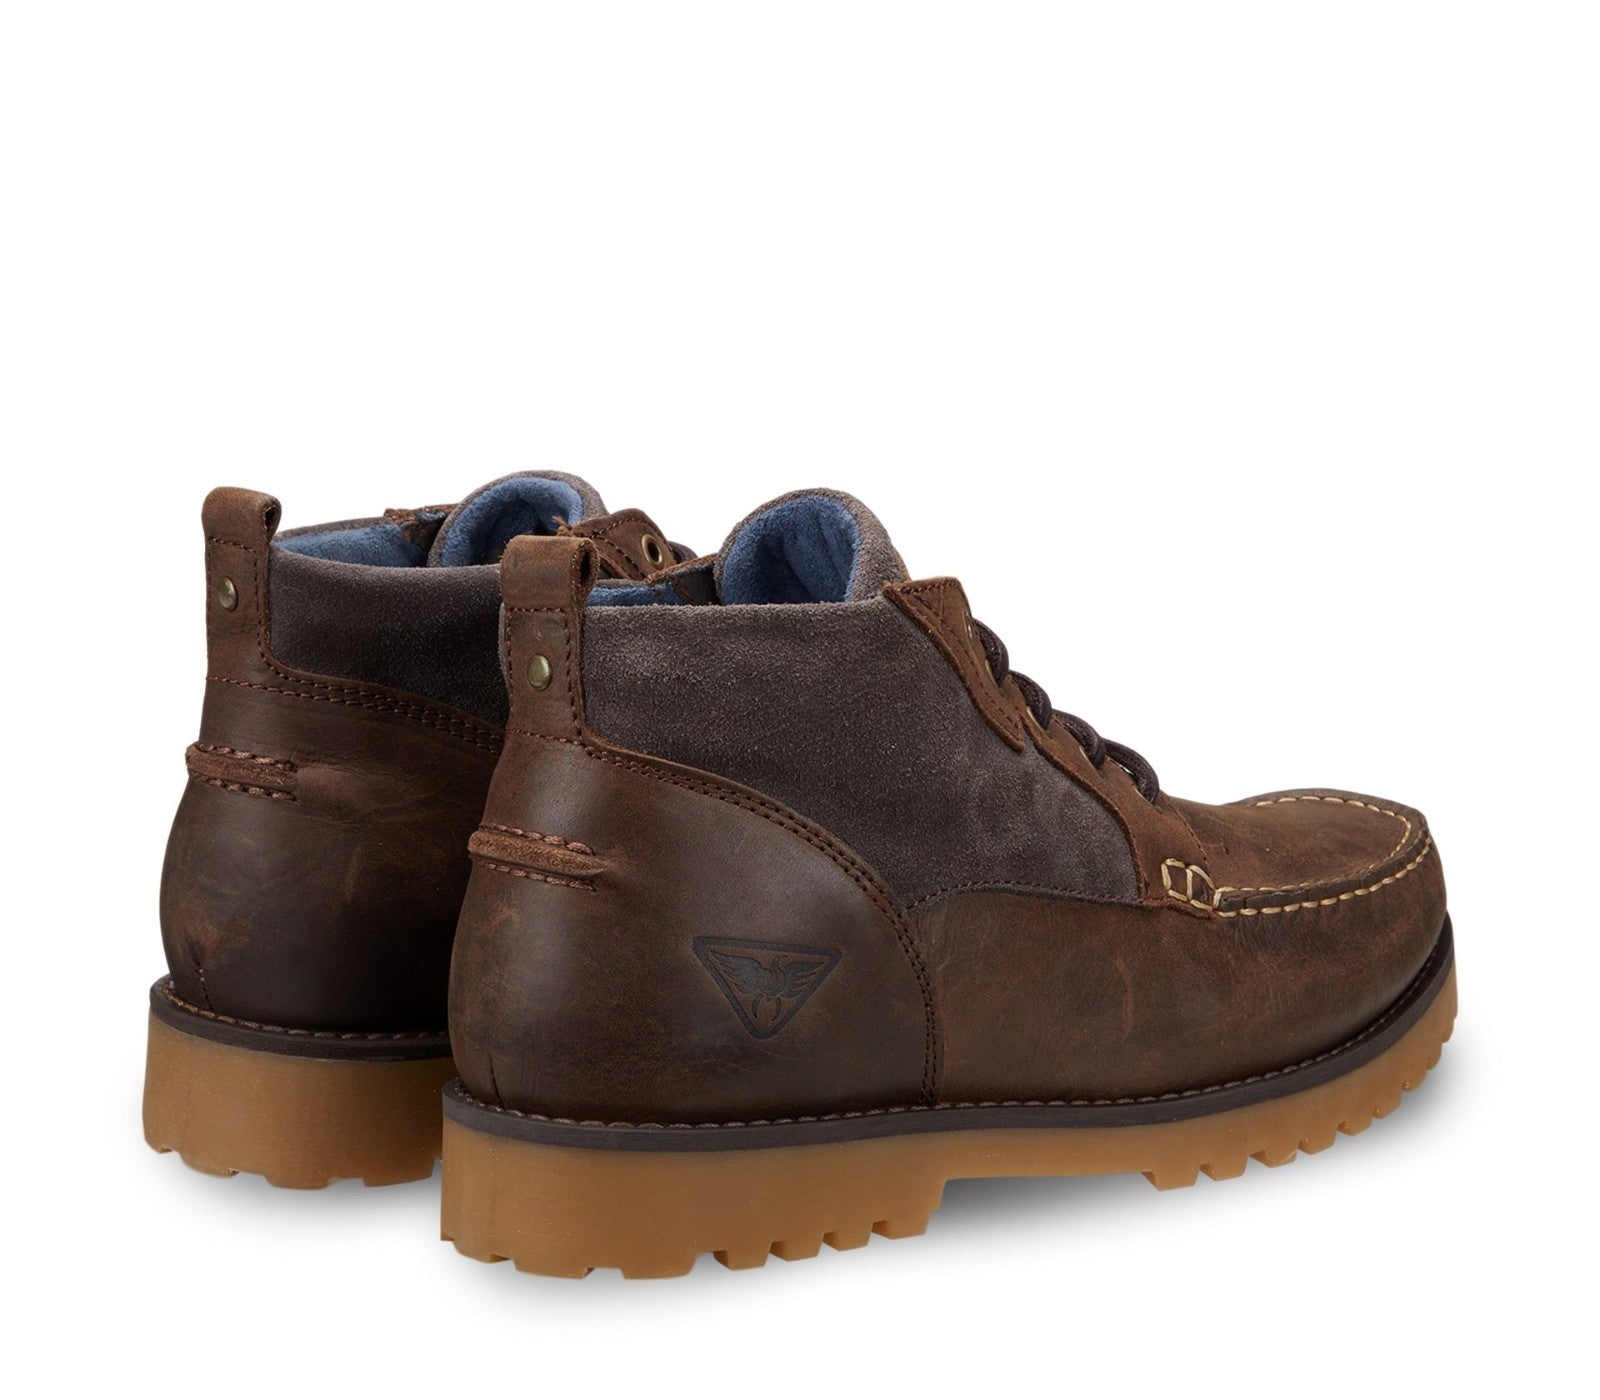 Cognac-colored Men's Soft Leather Boot 